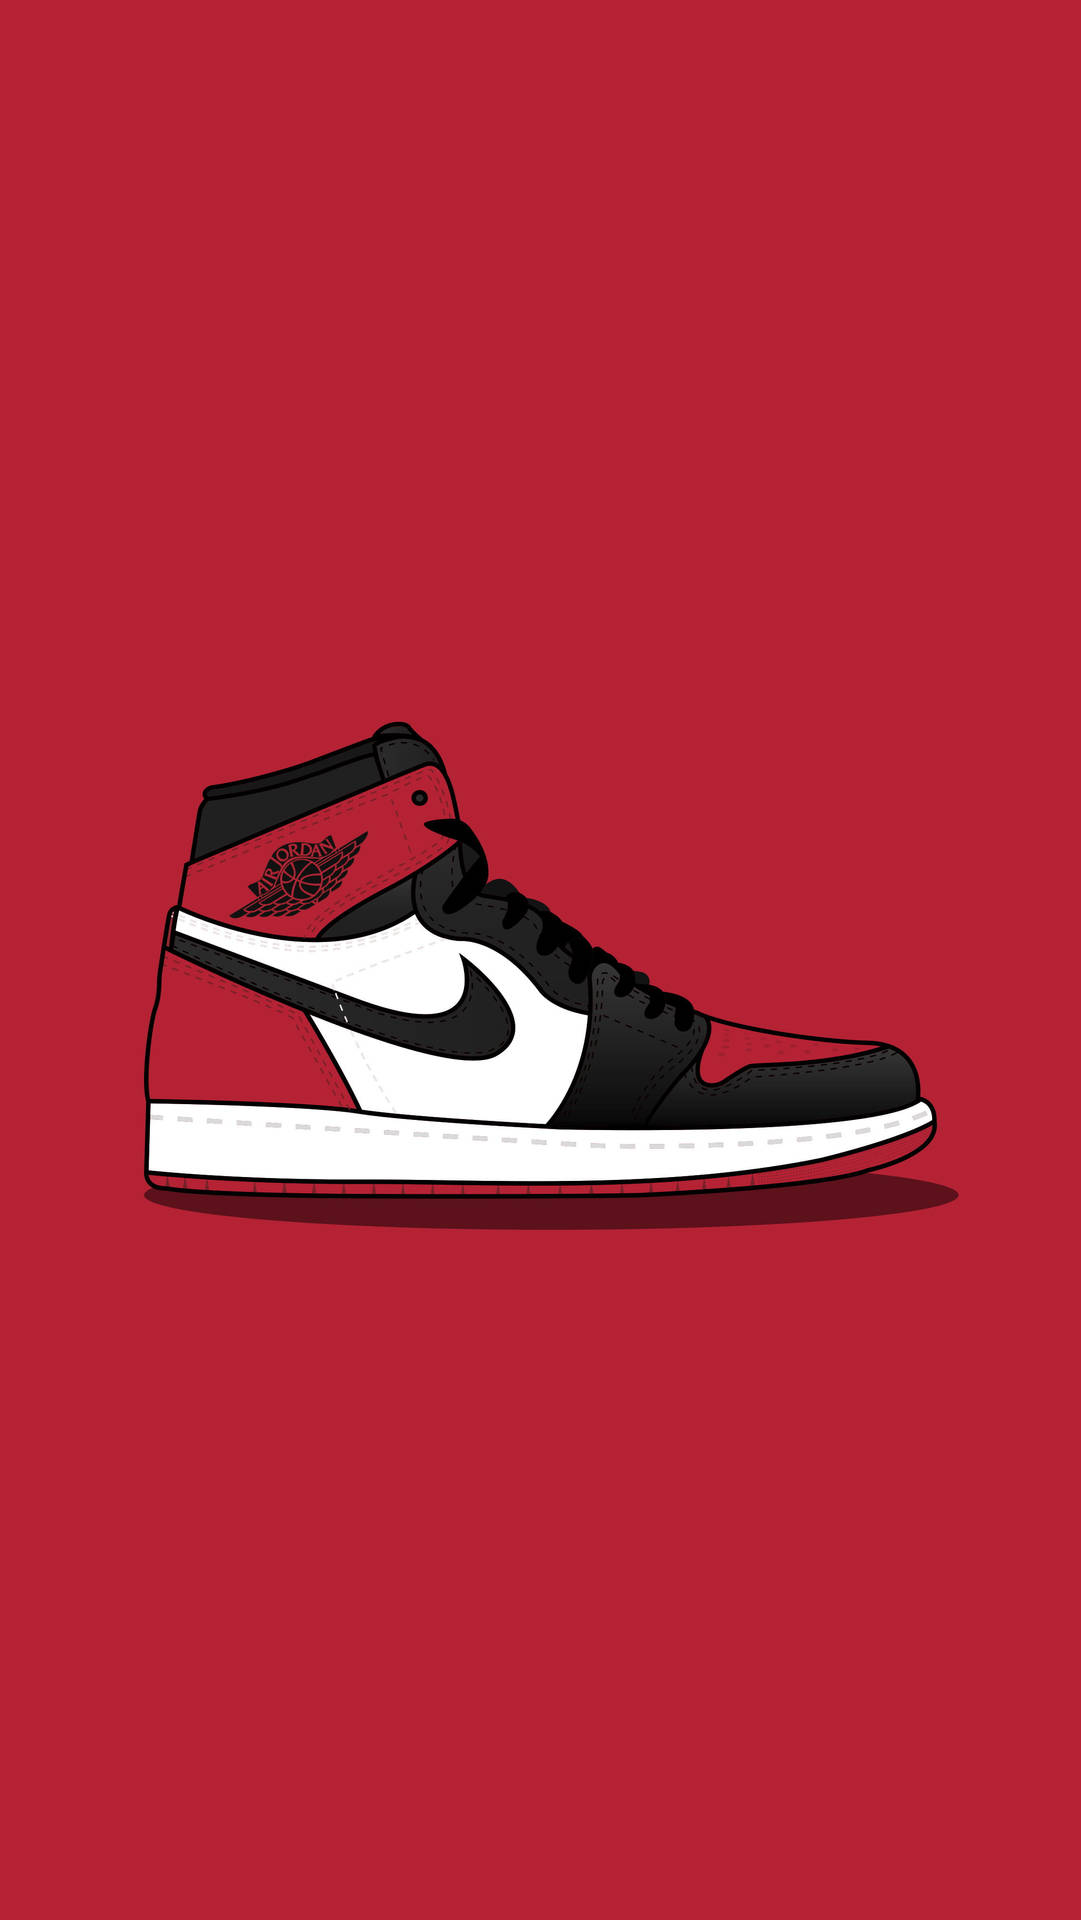 Aesthetic Nike Jordan 1 Background